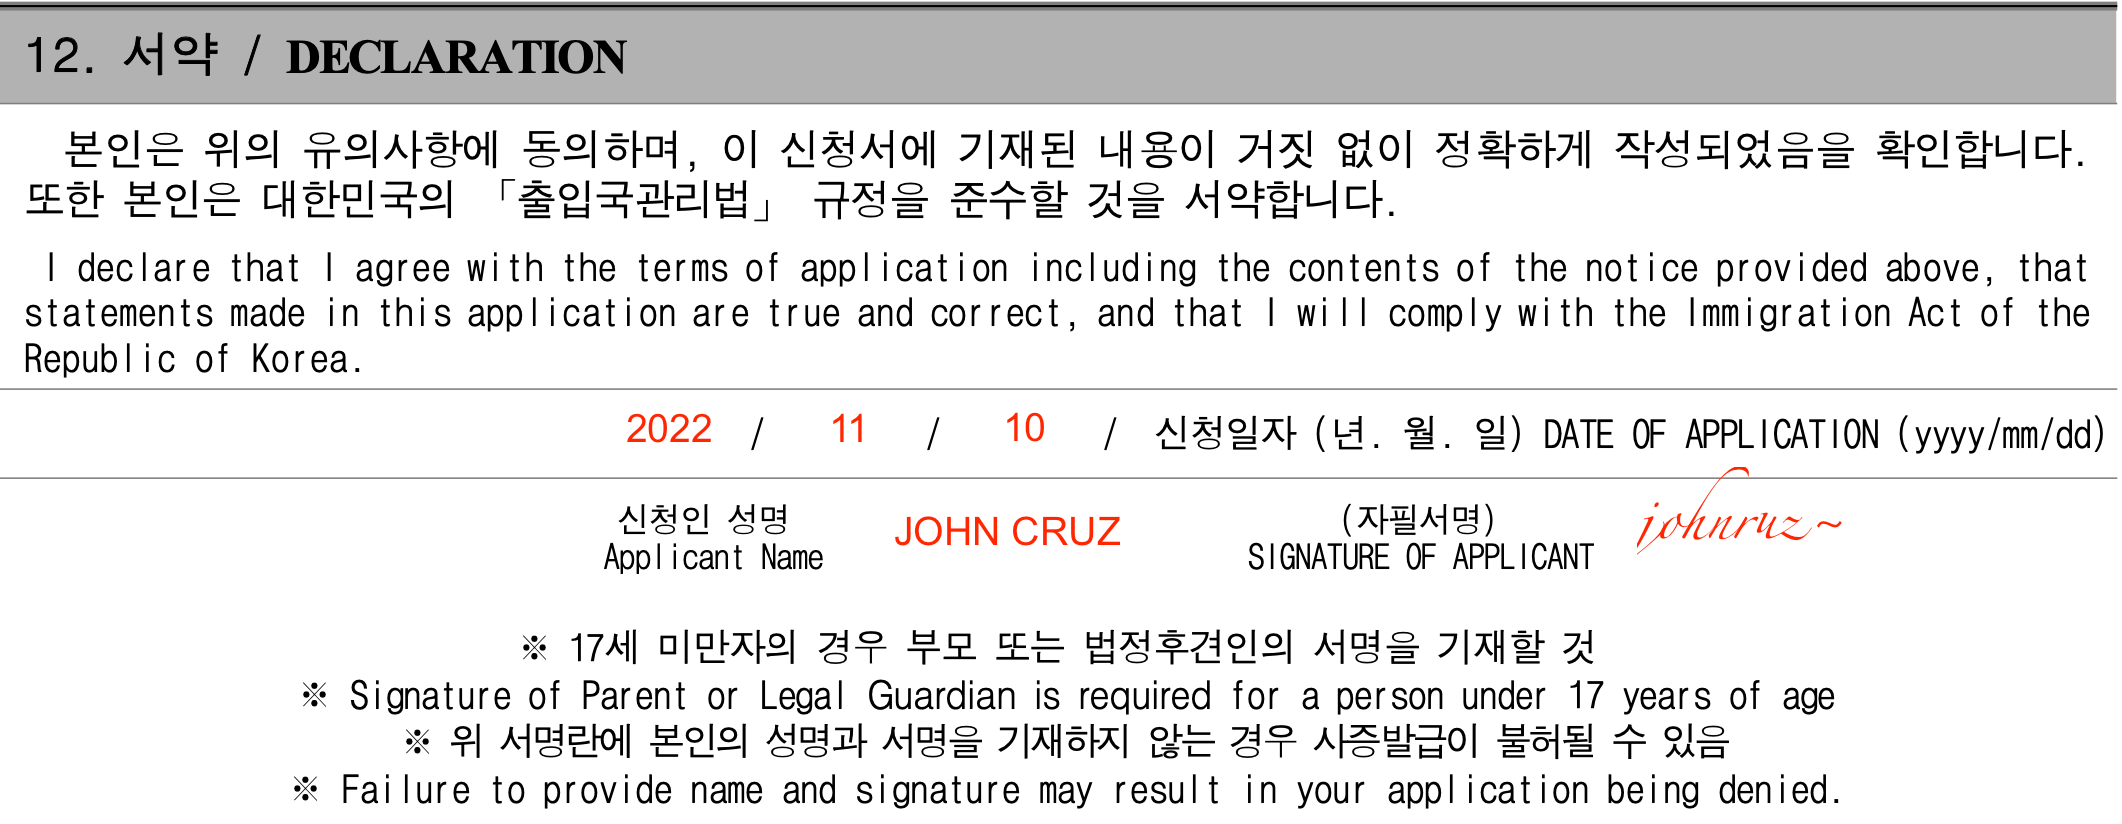 korean visa application letter of attorney